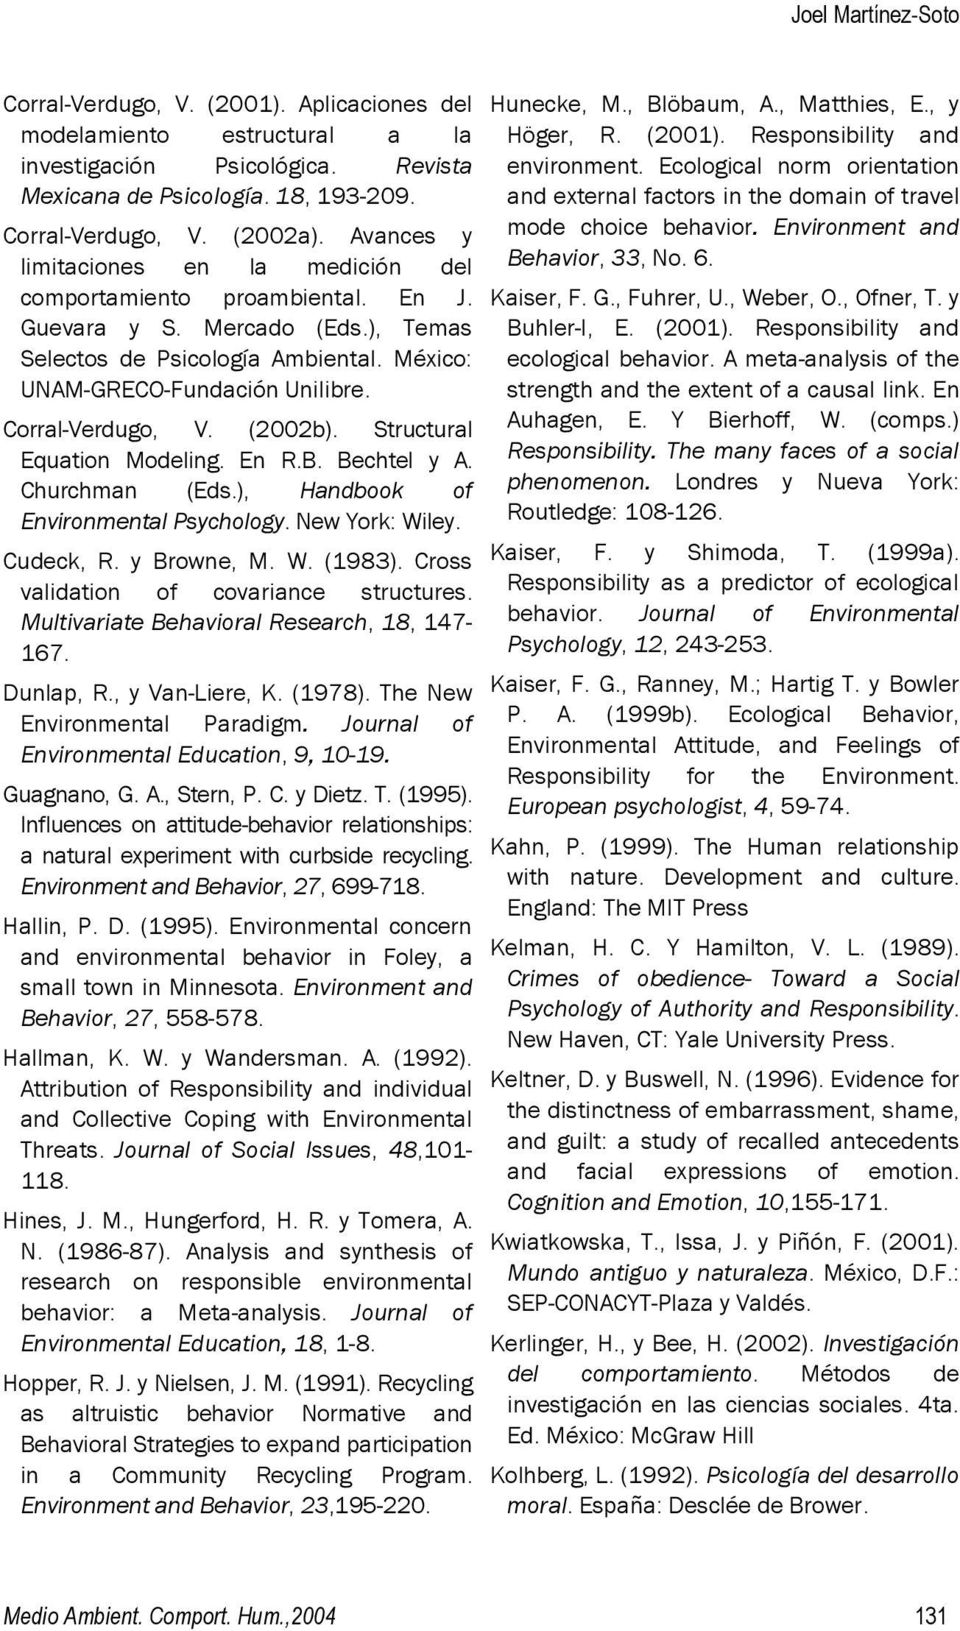 Corral-Verdugo, V. (2002b). Structural Equation Modeling. En R.B. Bechtel y A. Churchman (Eds.), Handbook of Environmental Psychology. New York: Wiley. Cudeck, R. y Browne, M. W. (1983).